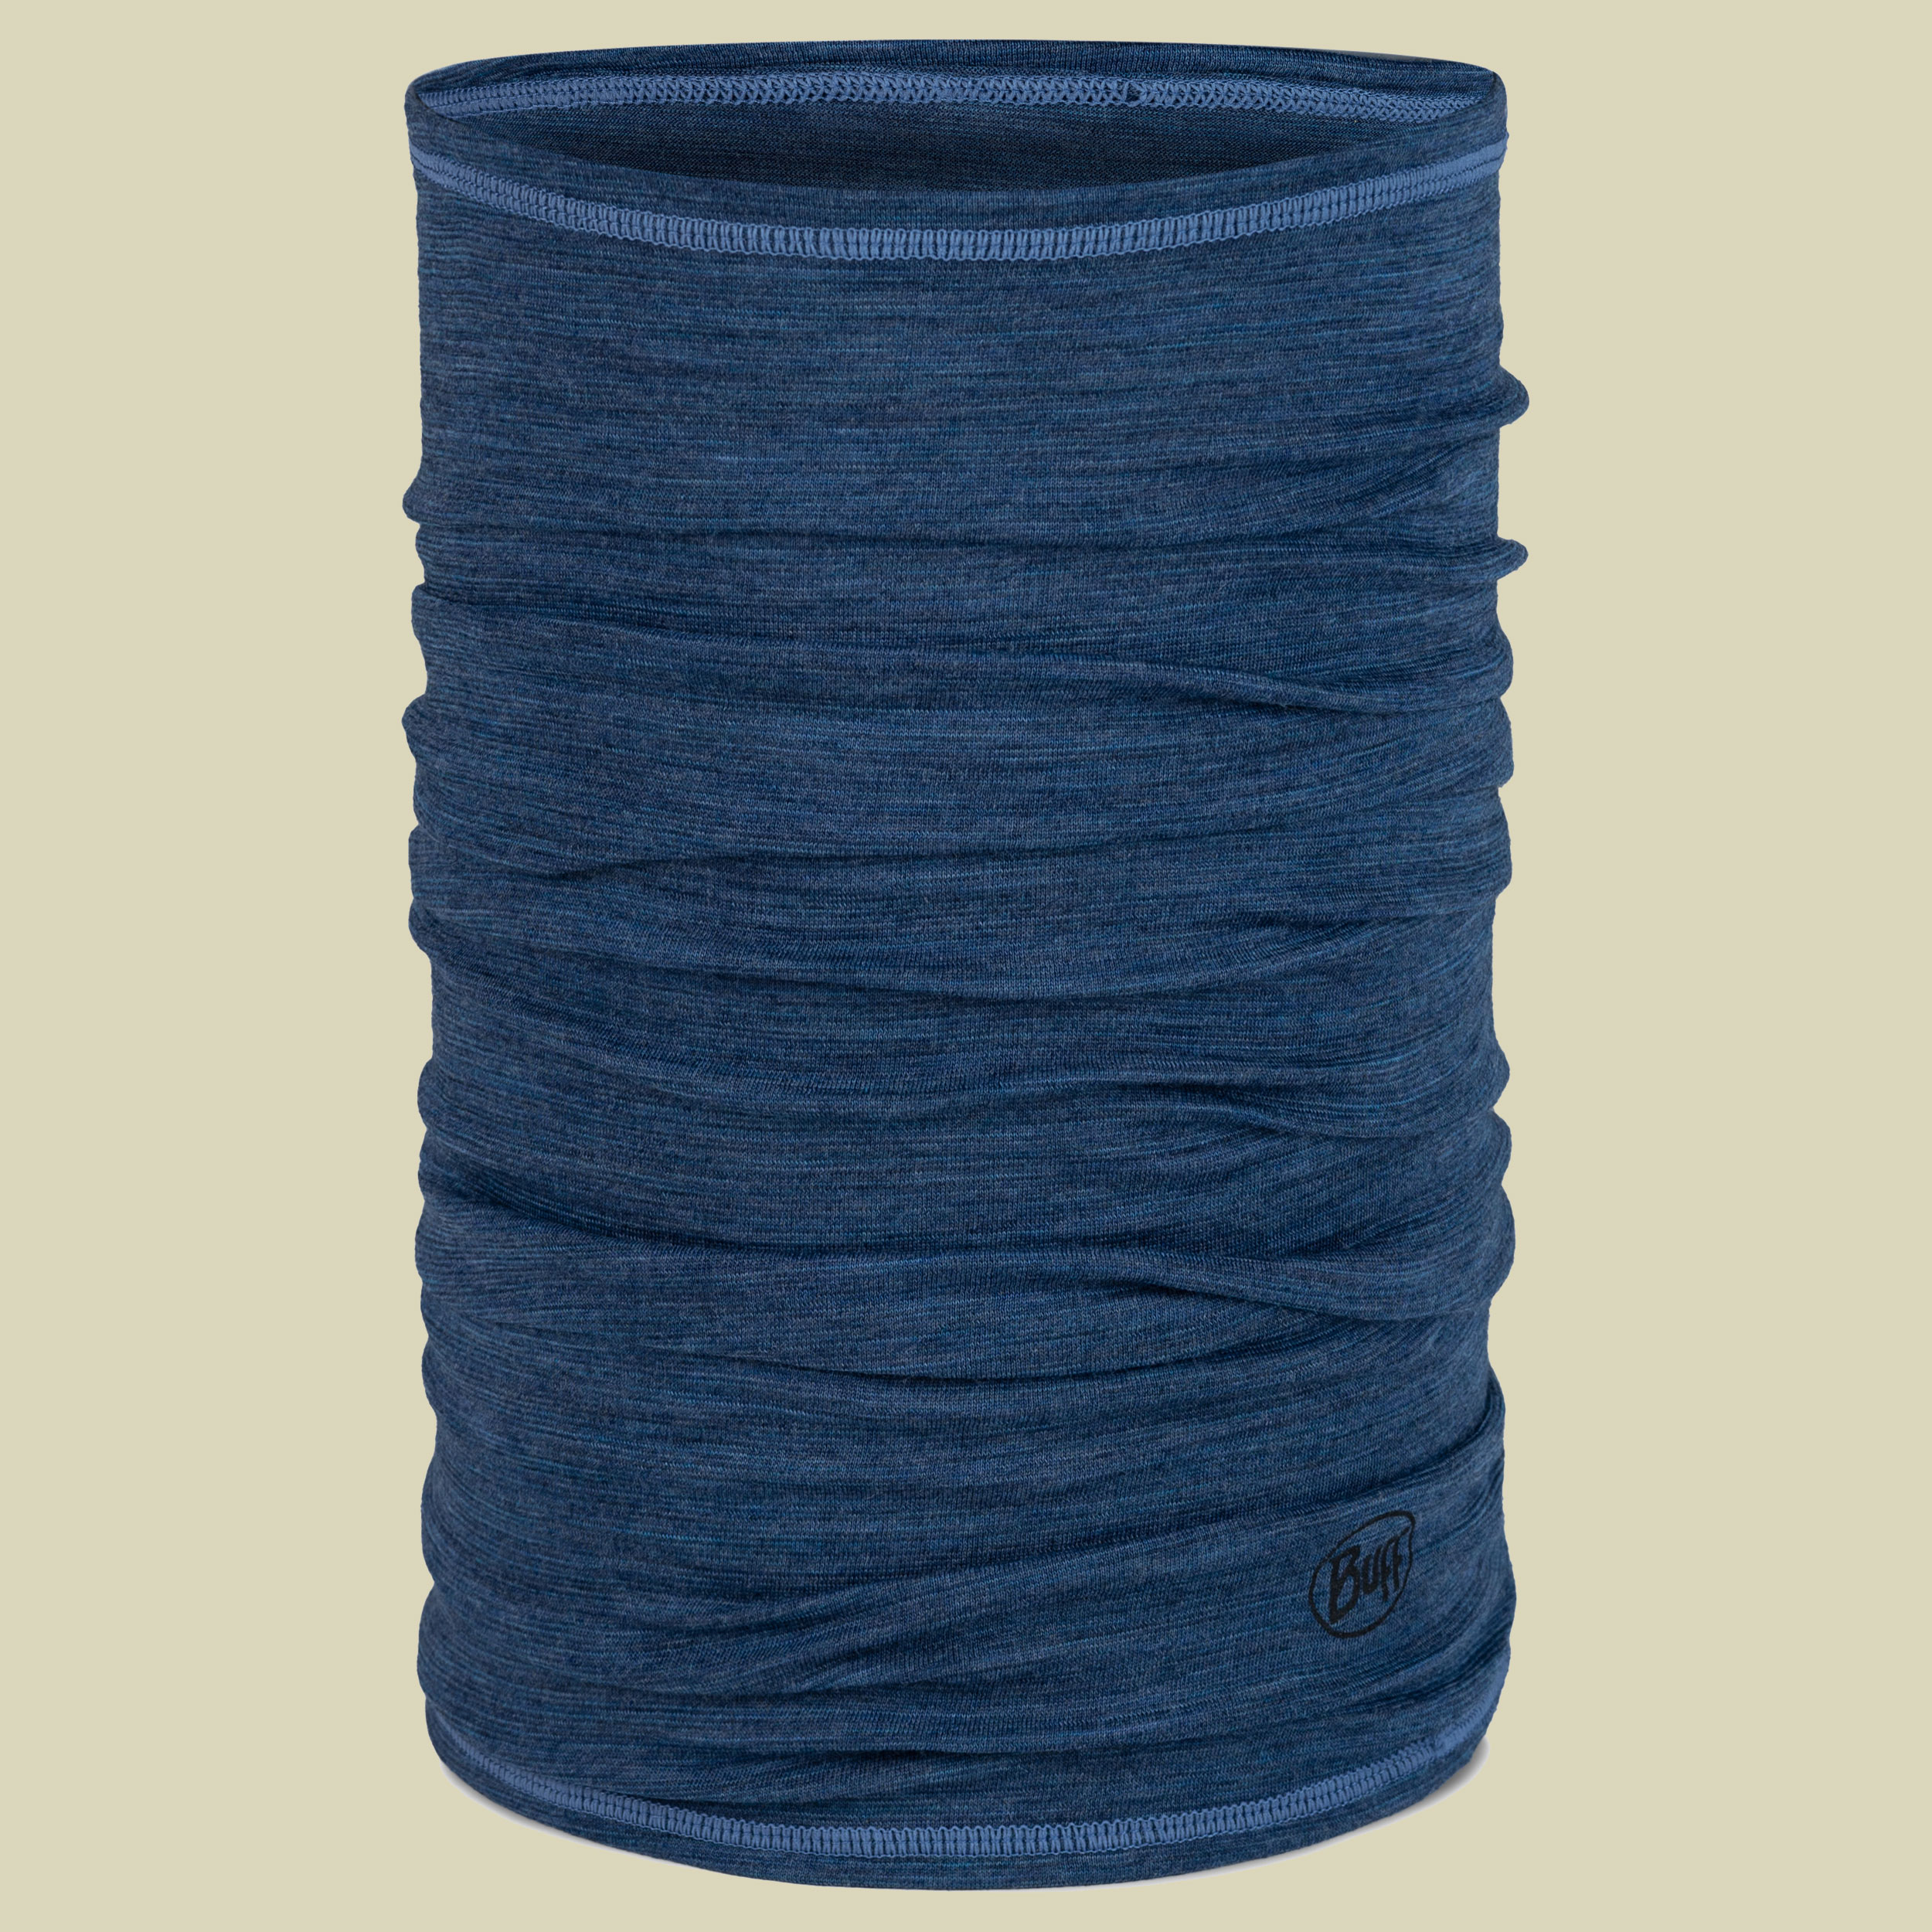 Lightweight Merino Wool Patterned & Stripes Größe regular Farbe multistripes tempest